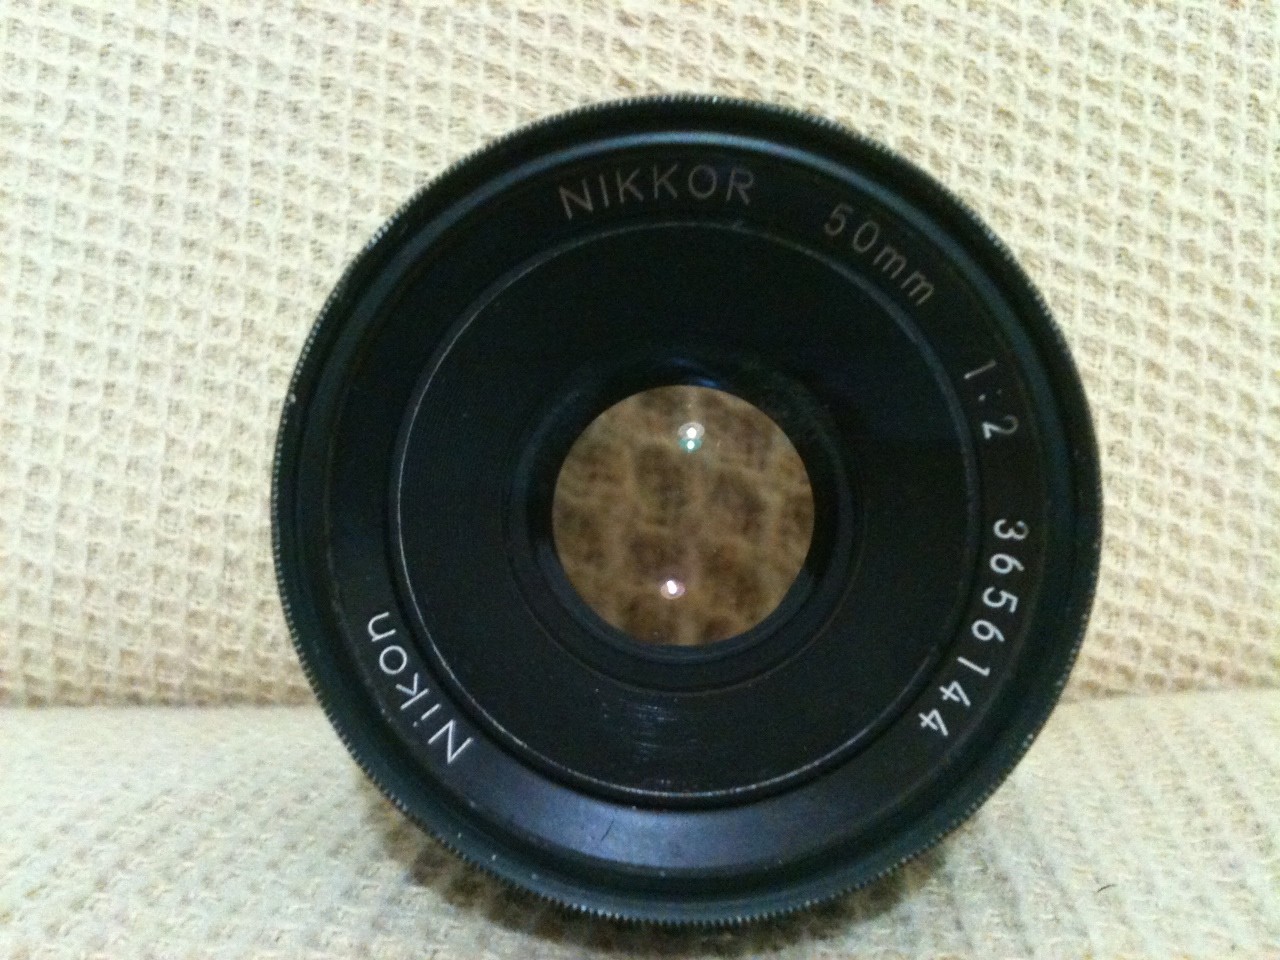  Nikon 50mm 1:2 AI-S Manuel Lens